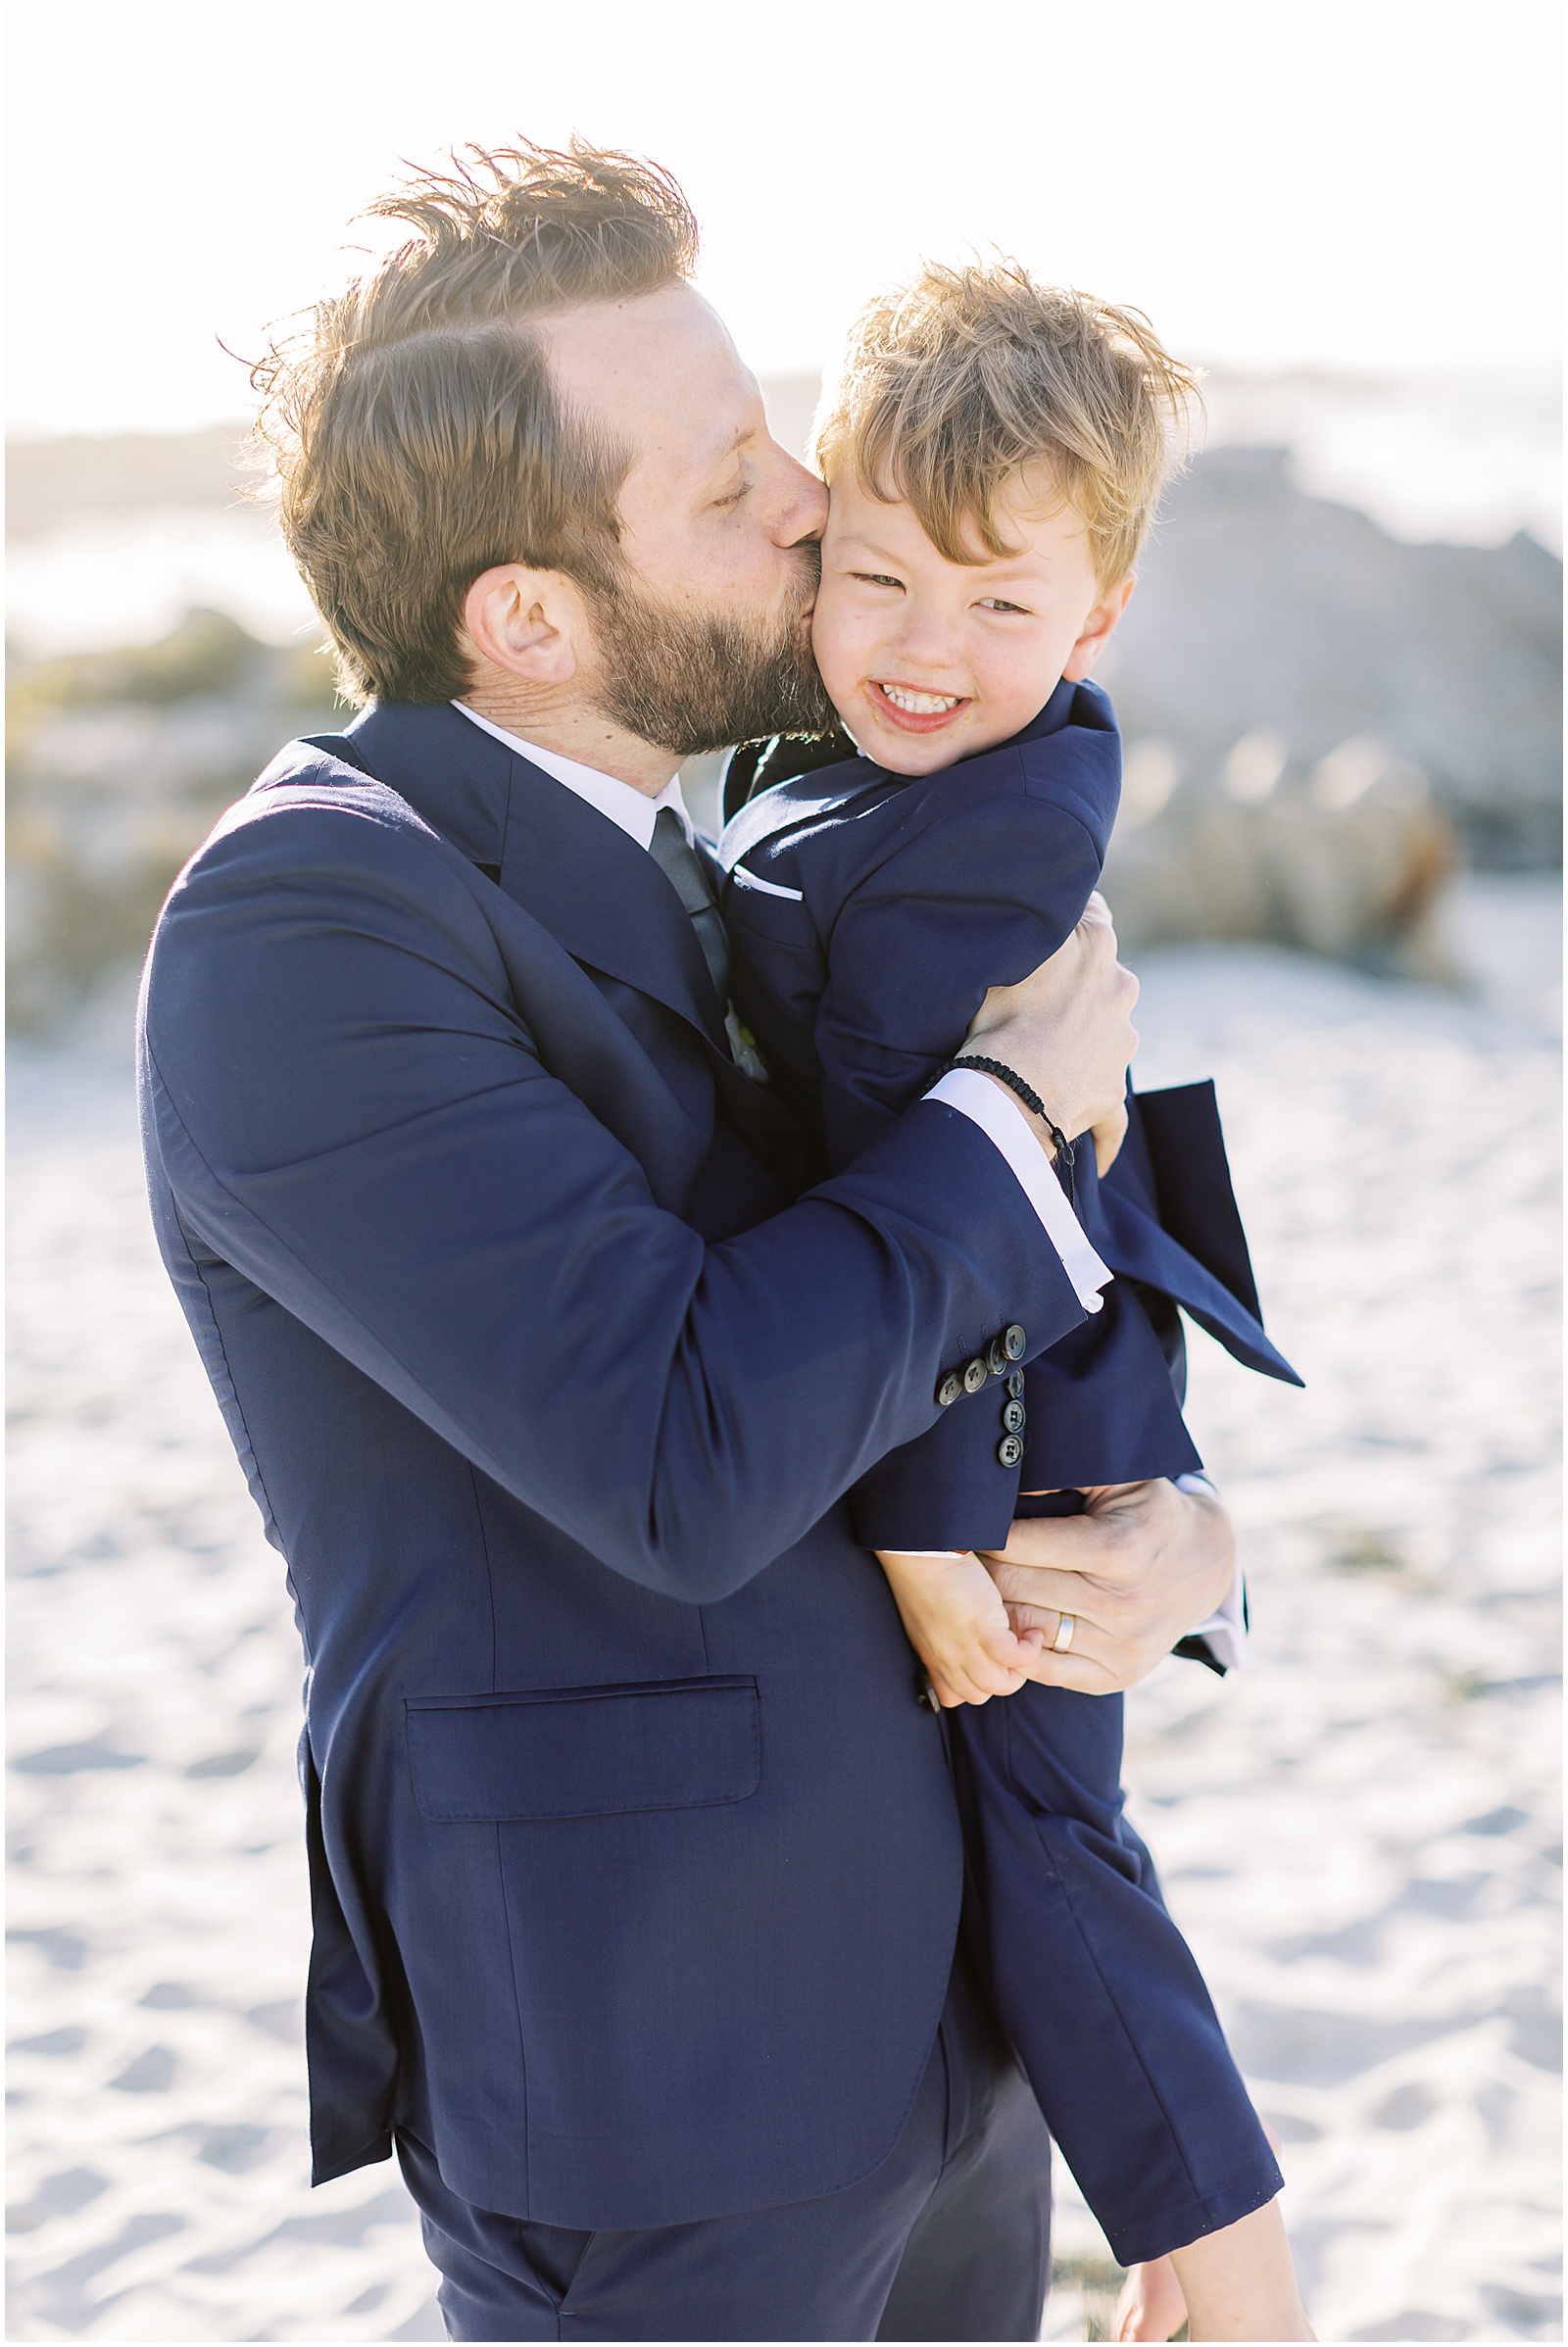 groom kissing his son on the cheek